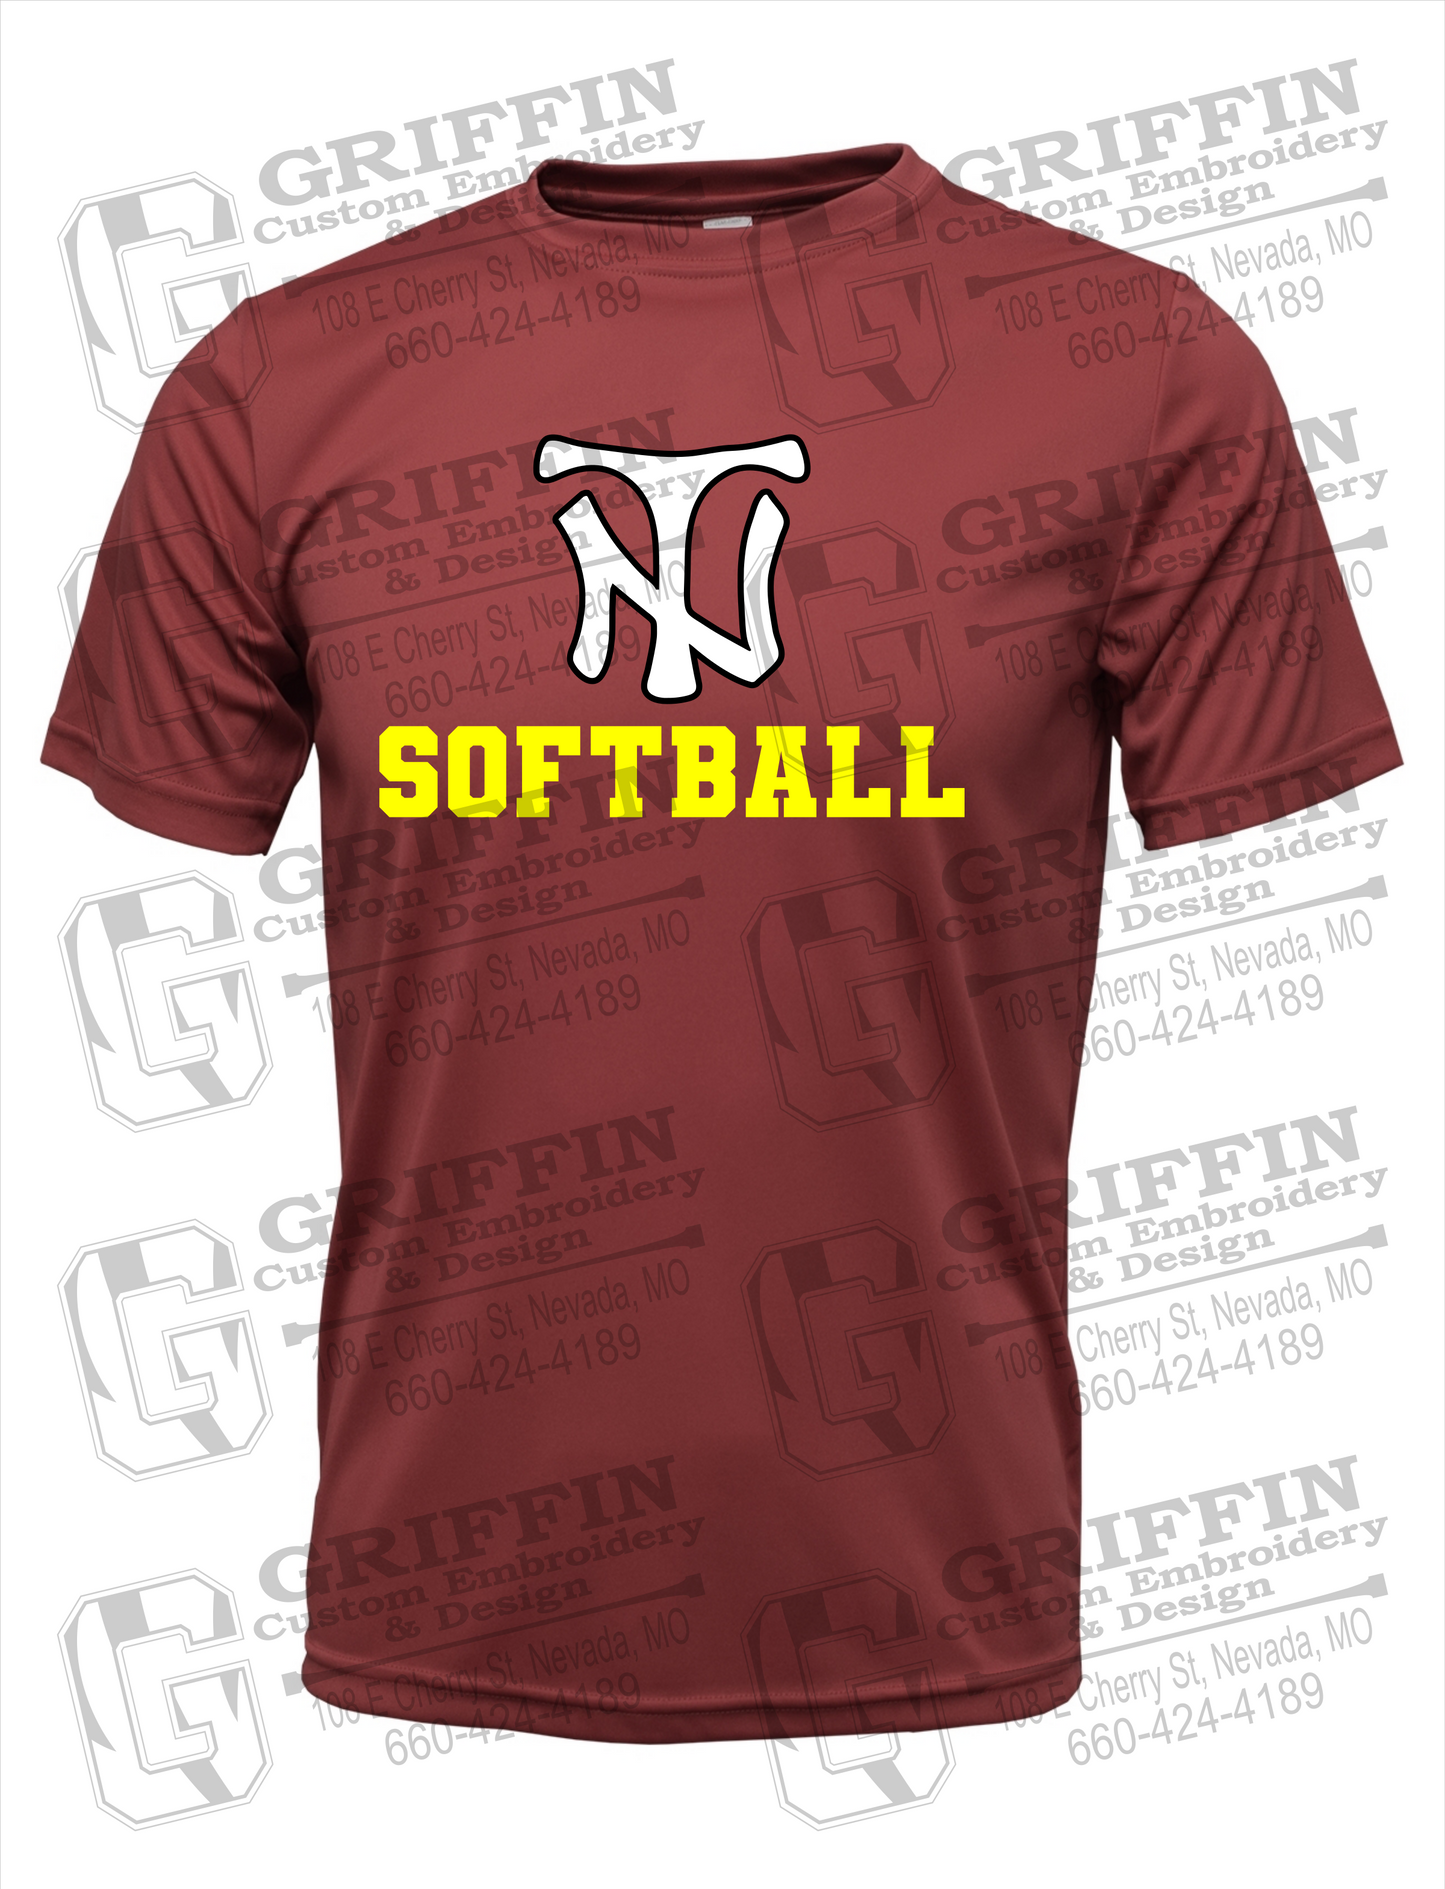 Nevada Tigers 24-C Dry-Fit T-Shirt - Softball